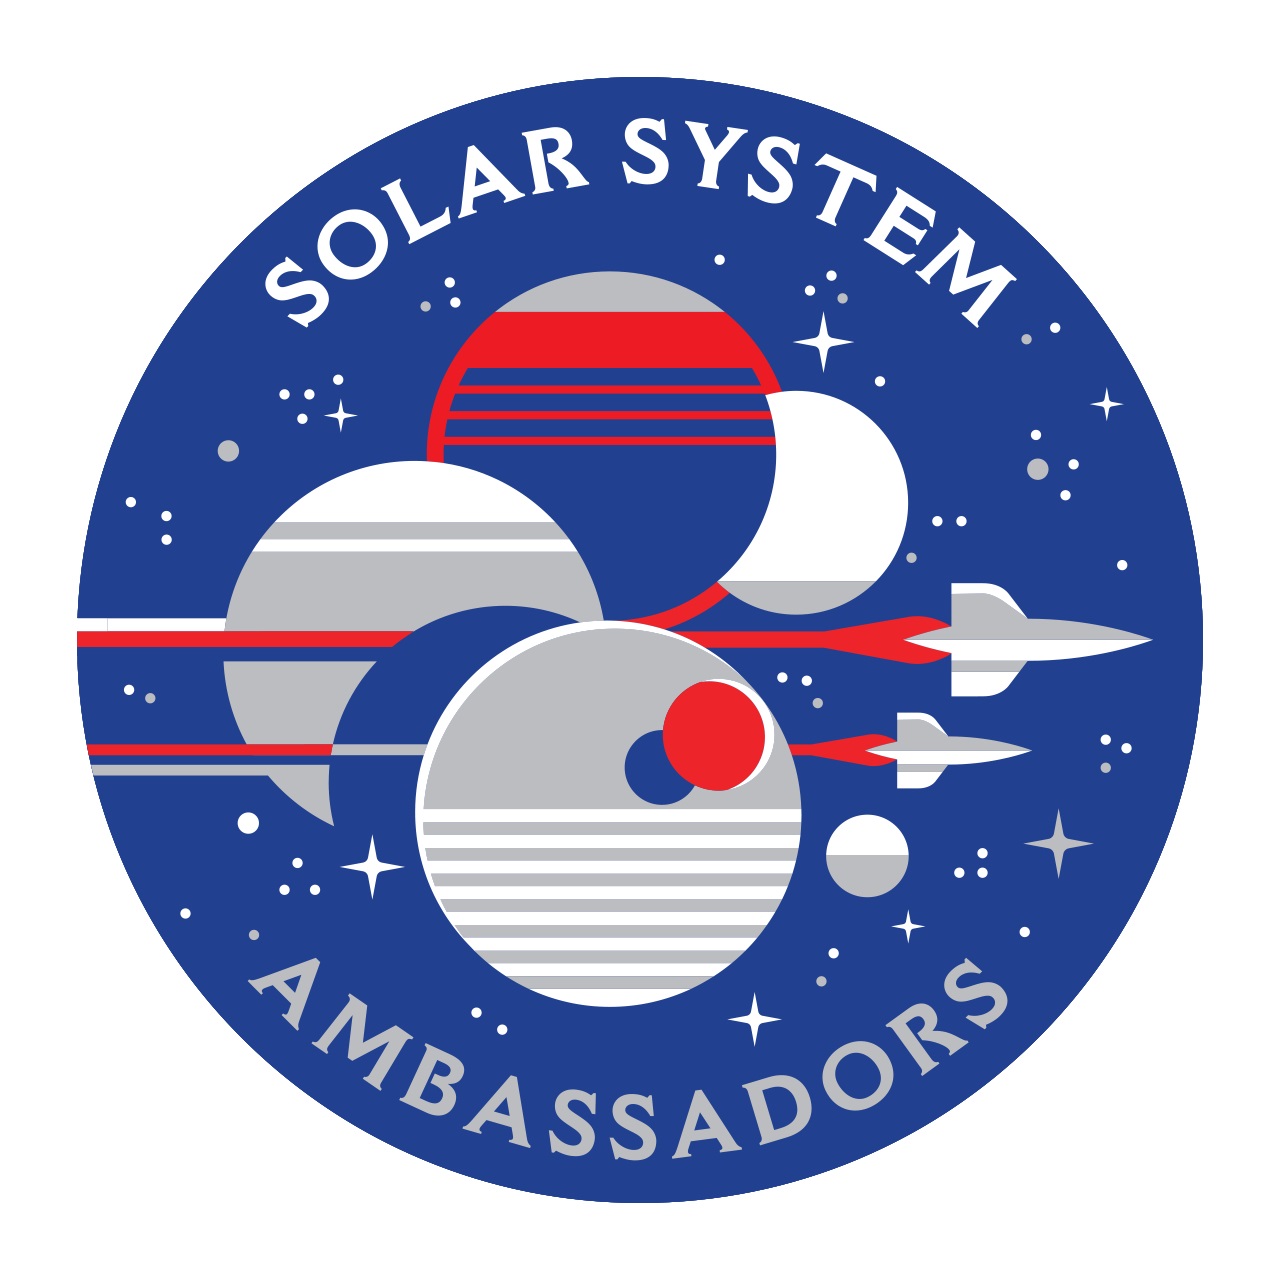 Solar System Ambassadors logo